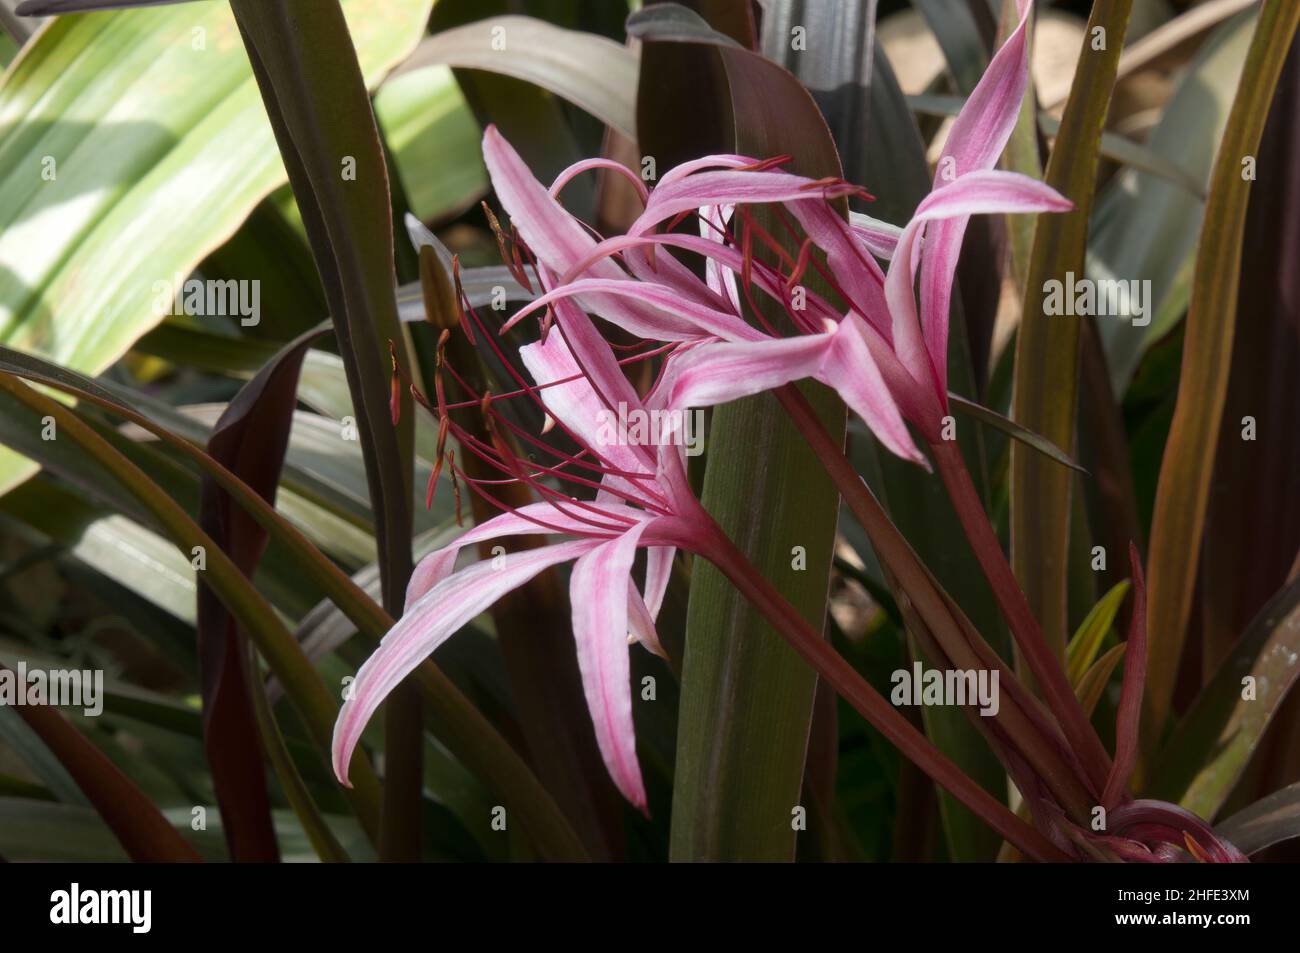 Sydney Australia, showy pink flowers of crinum menehune bulb Stock Photo